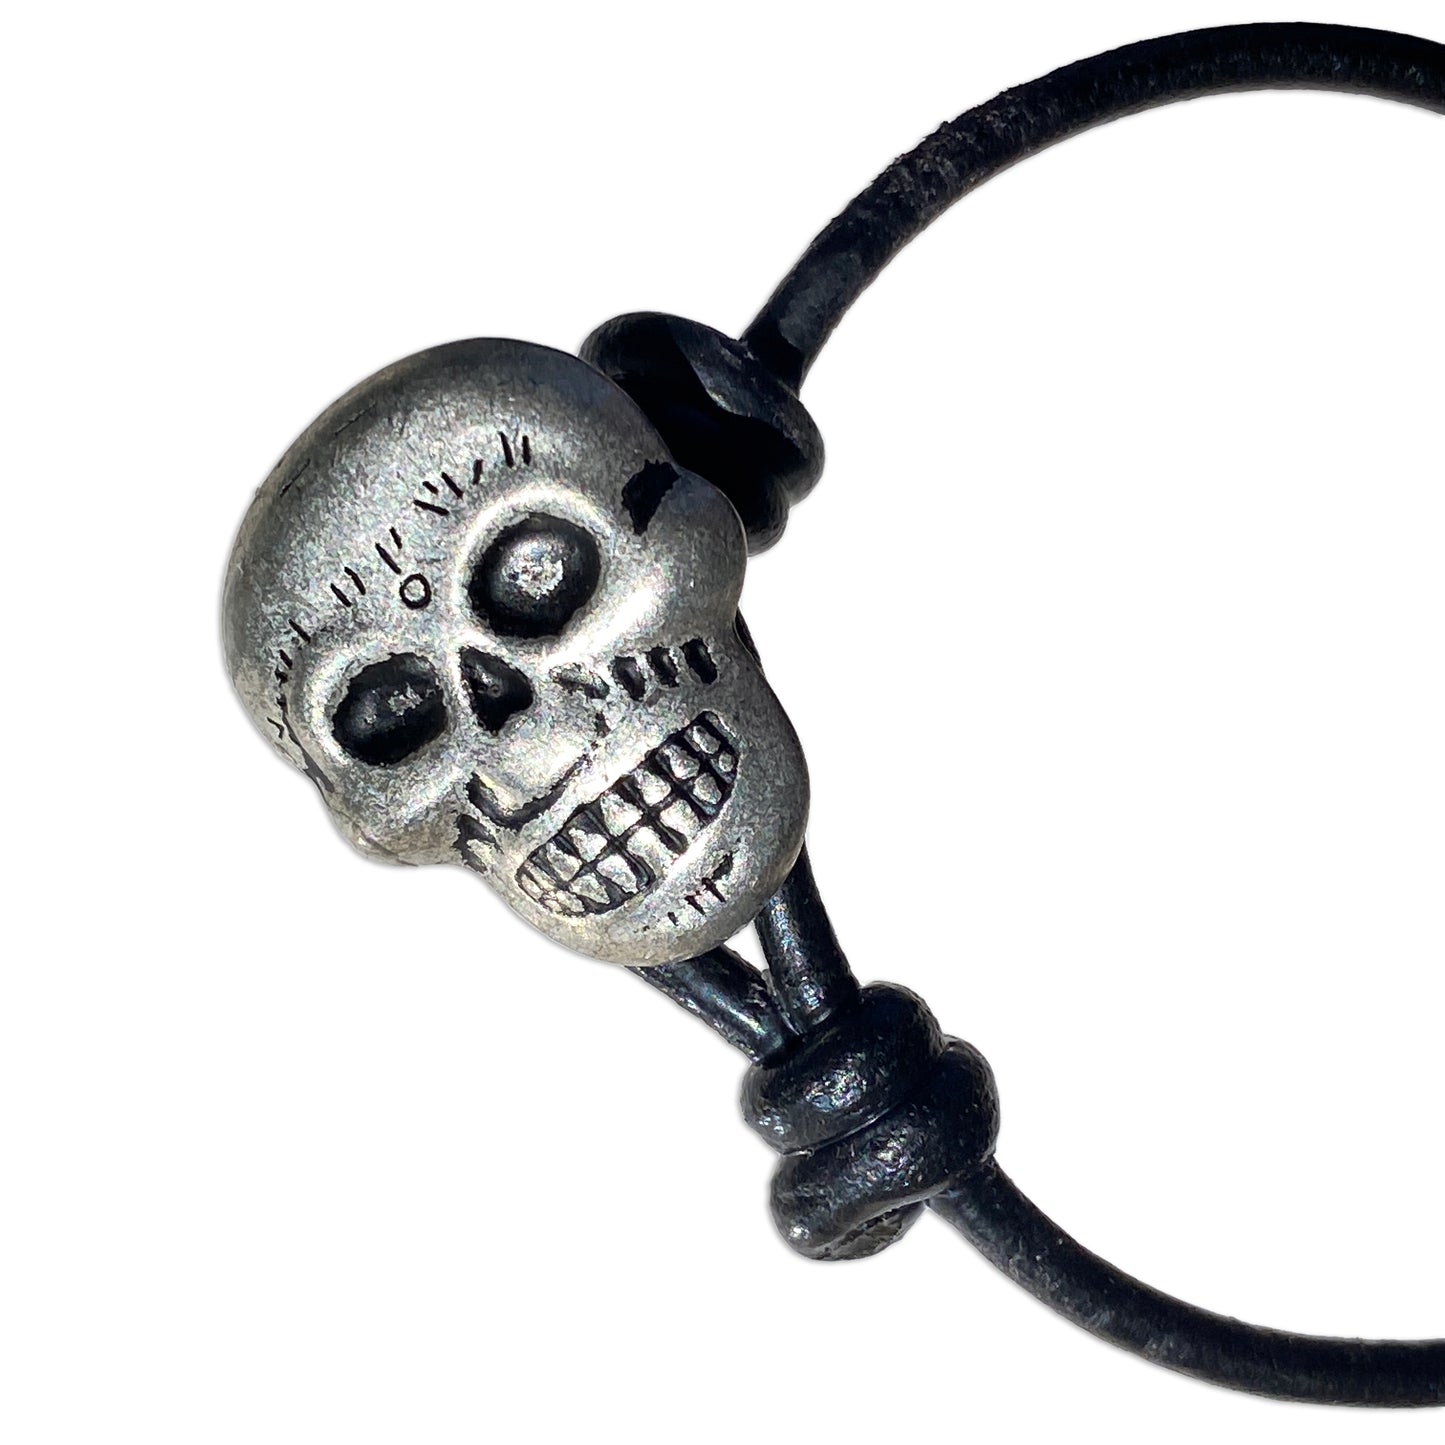 Labradorite gemstone Leather bracelet with Pewter Skull Button clasp